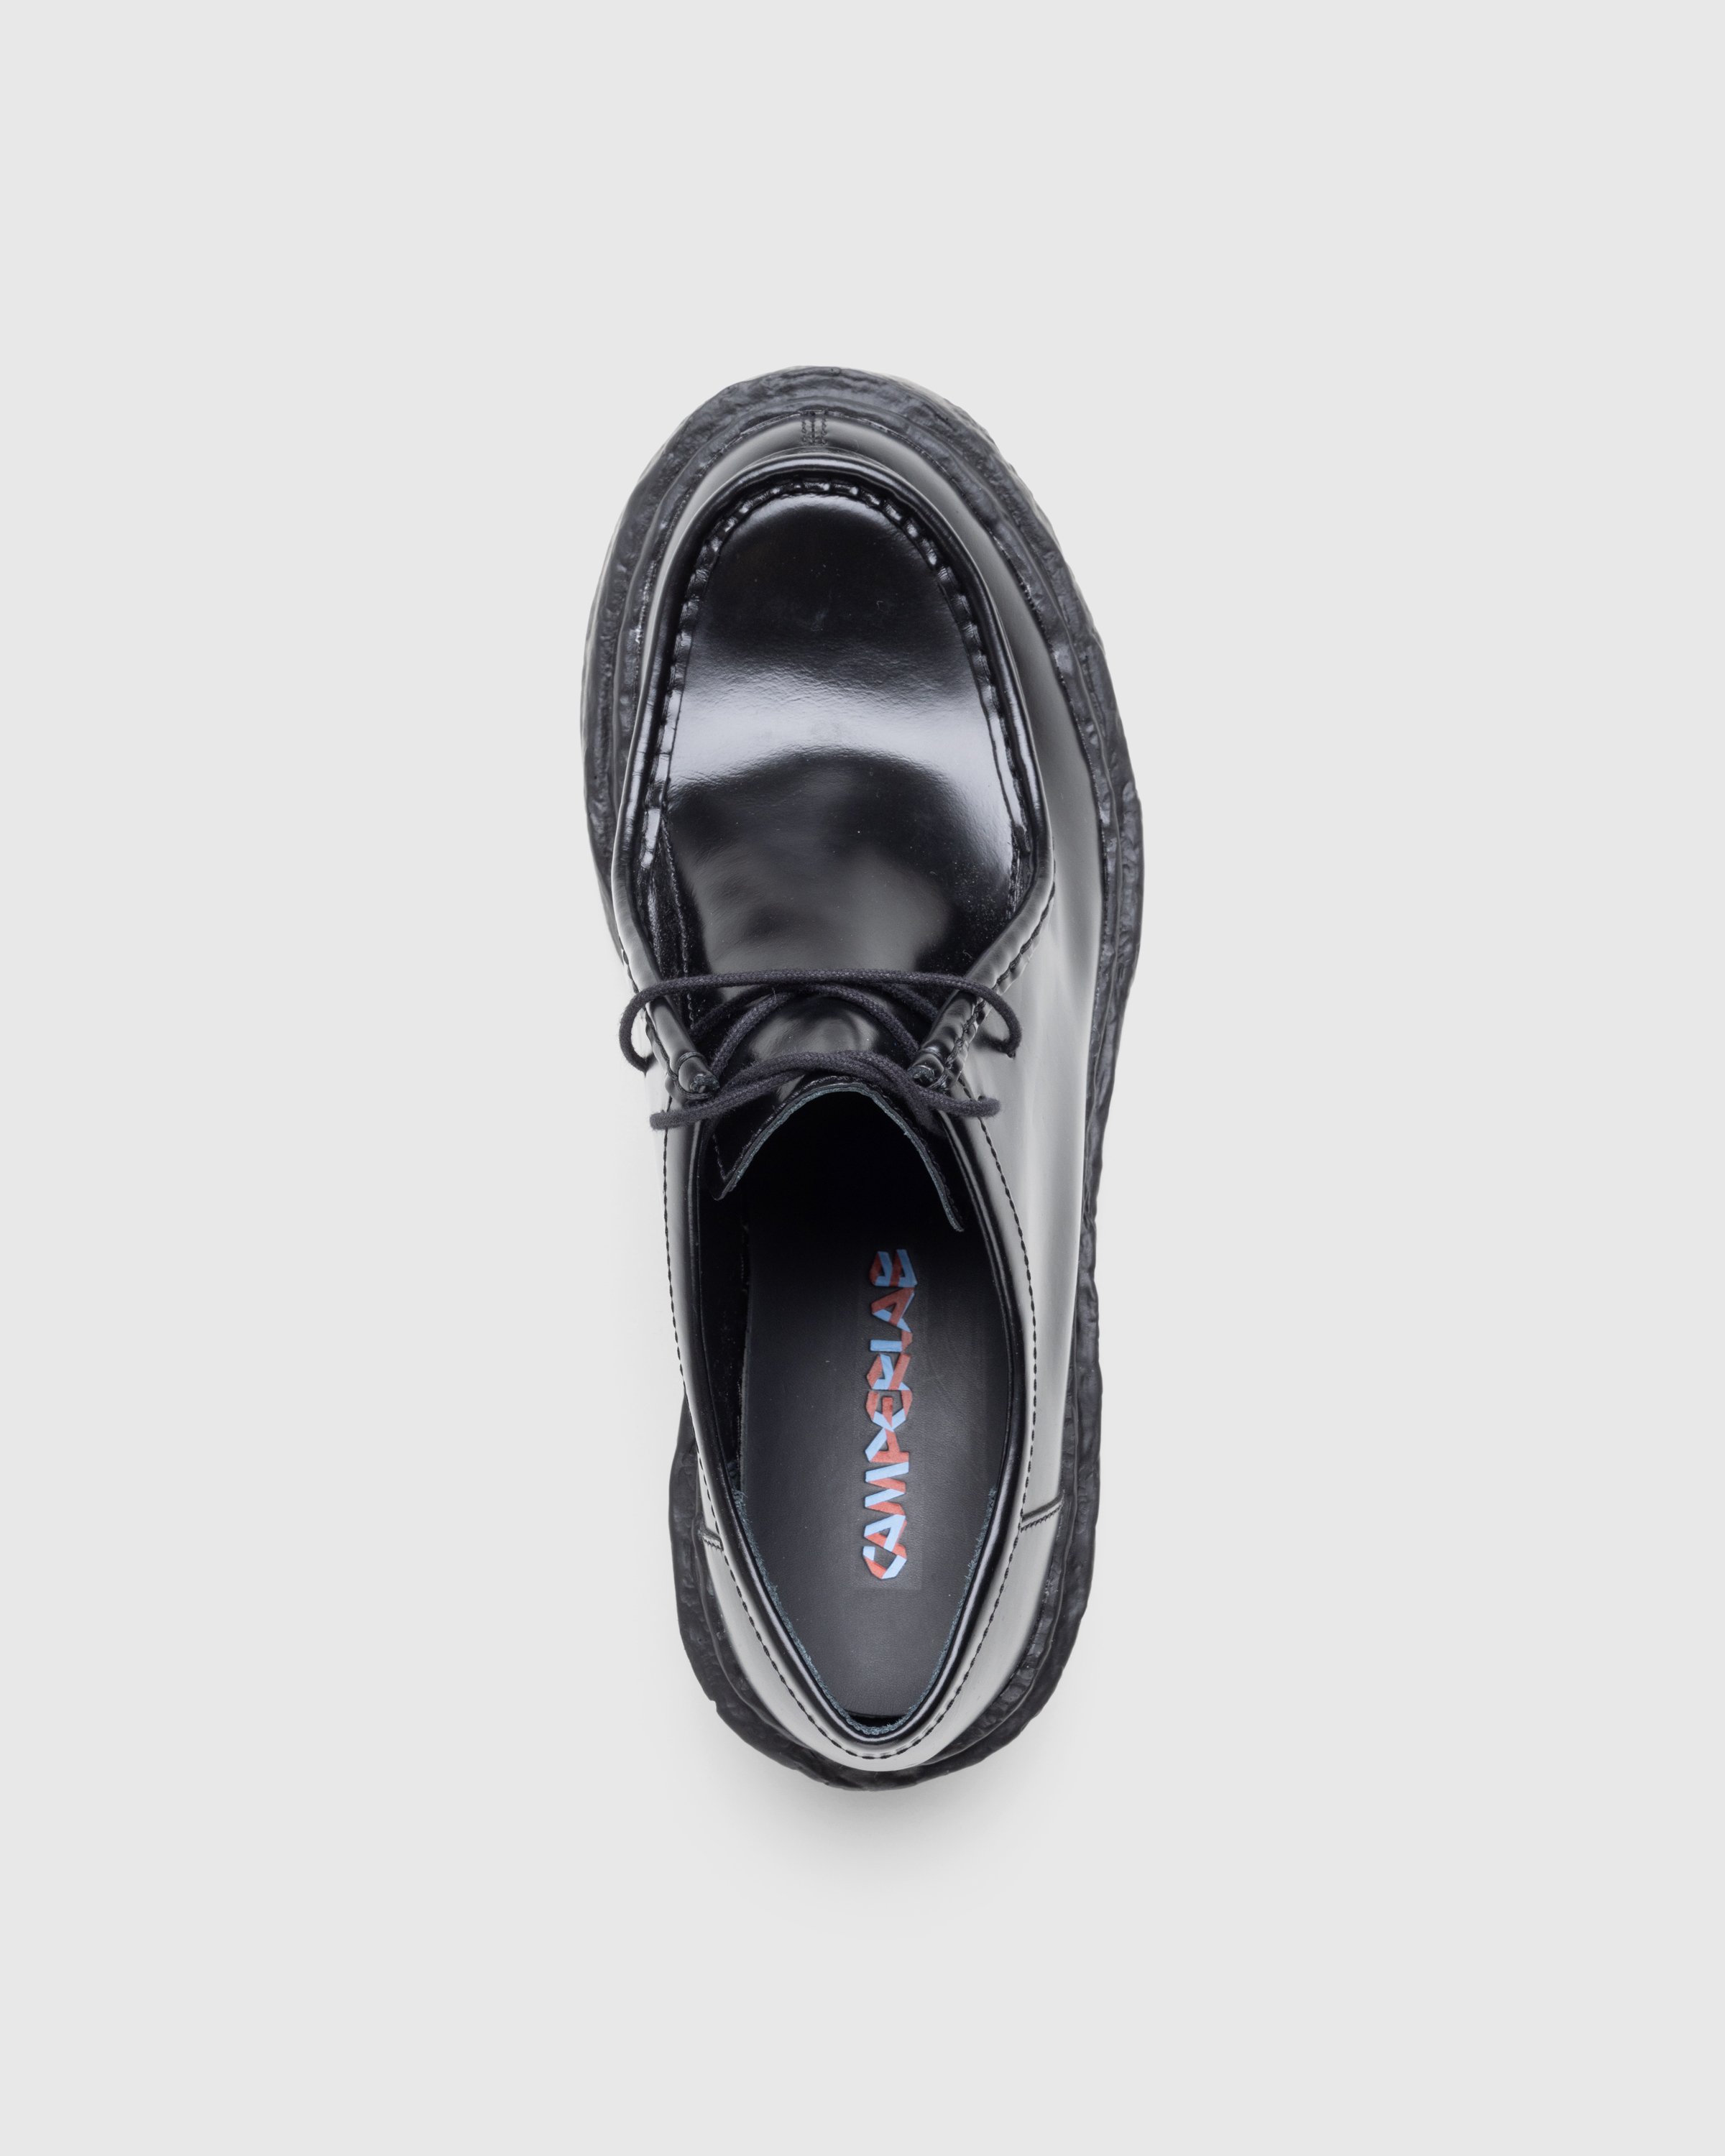 CAMPERLAB - Vamonos - Footwear - Black - Image 5